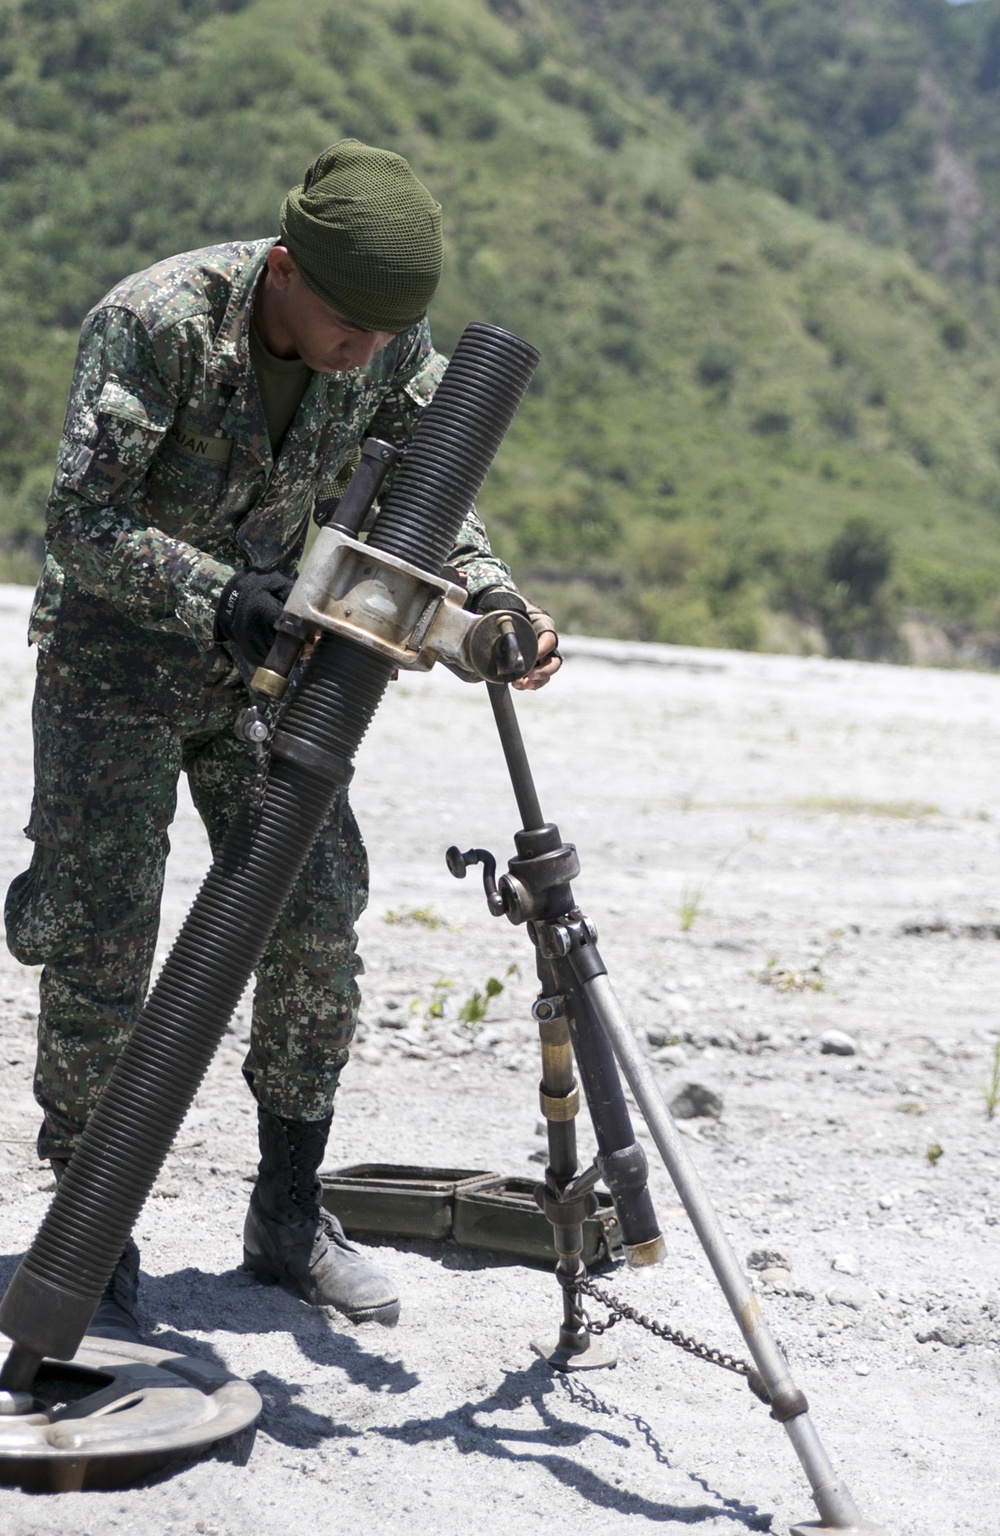 Launching Balikatan 2014 with basic mortar training